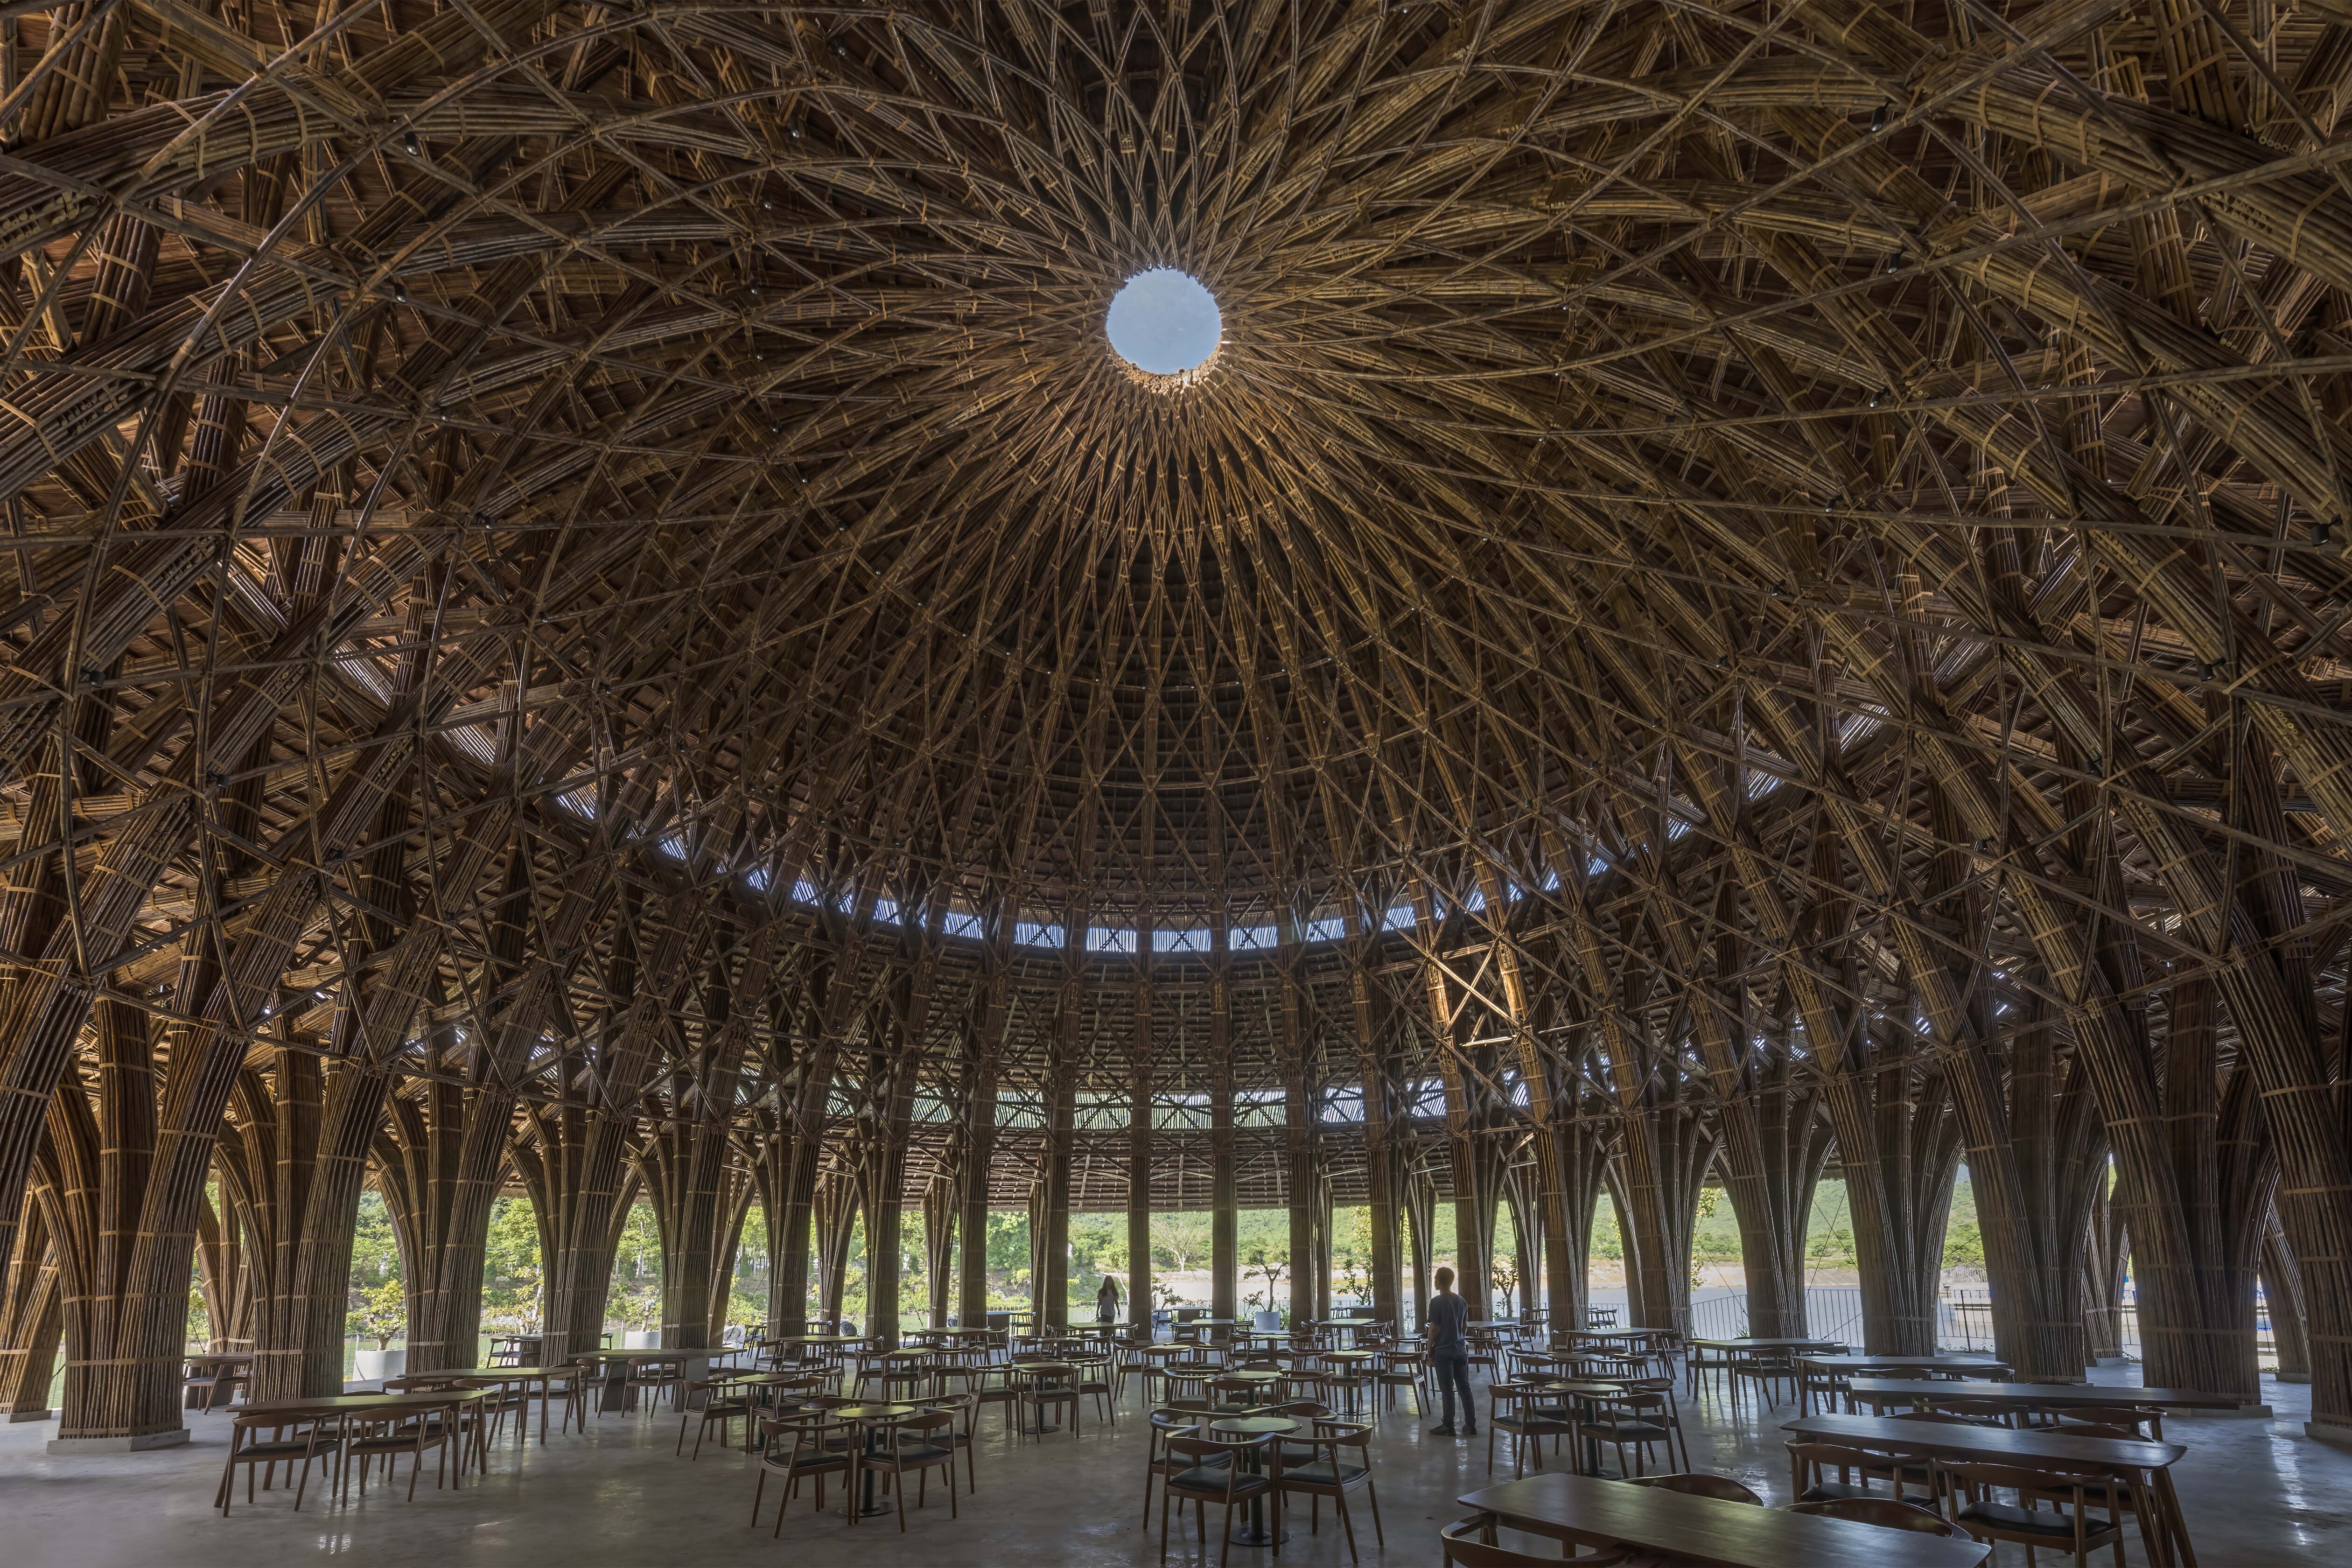 Vedana Restaurant 的圓形穹頂結構，展現出多層次的竹造編織工藝之美。